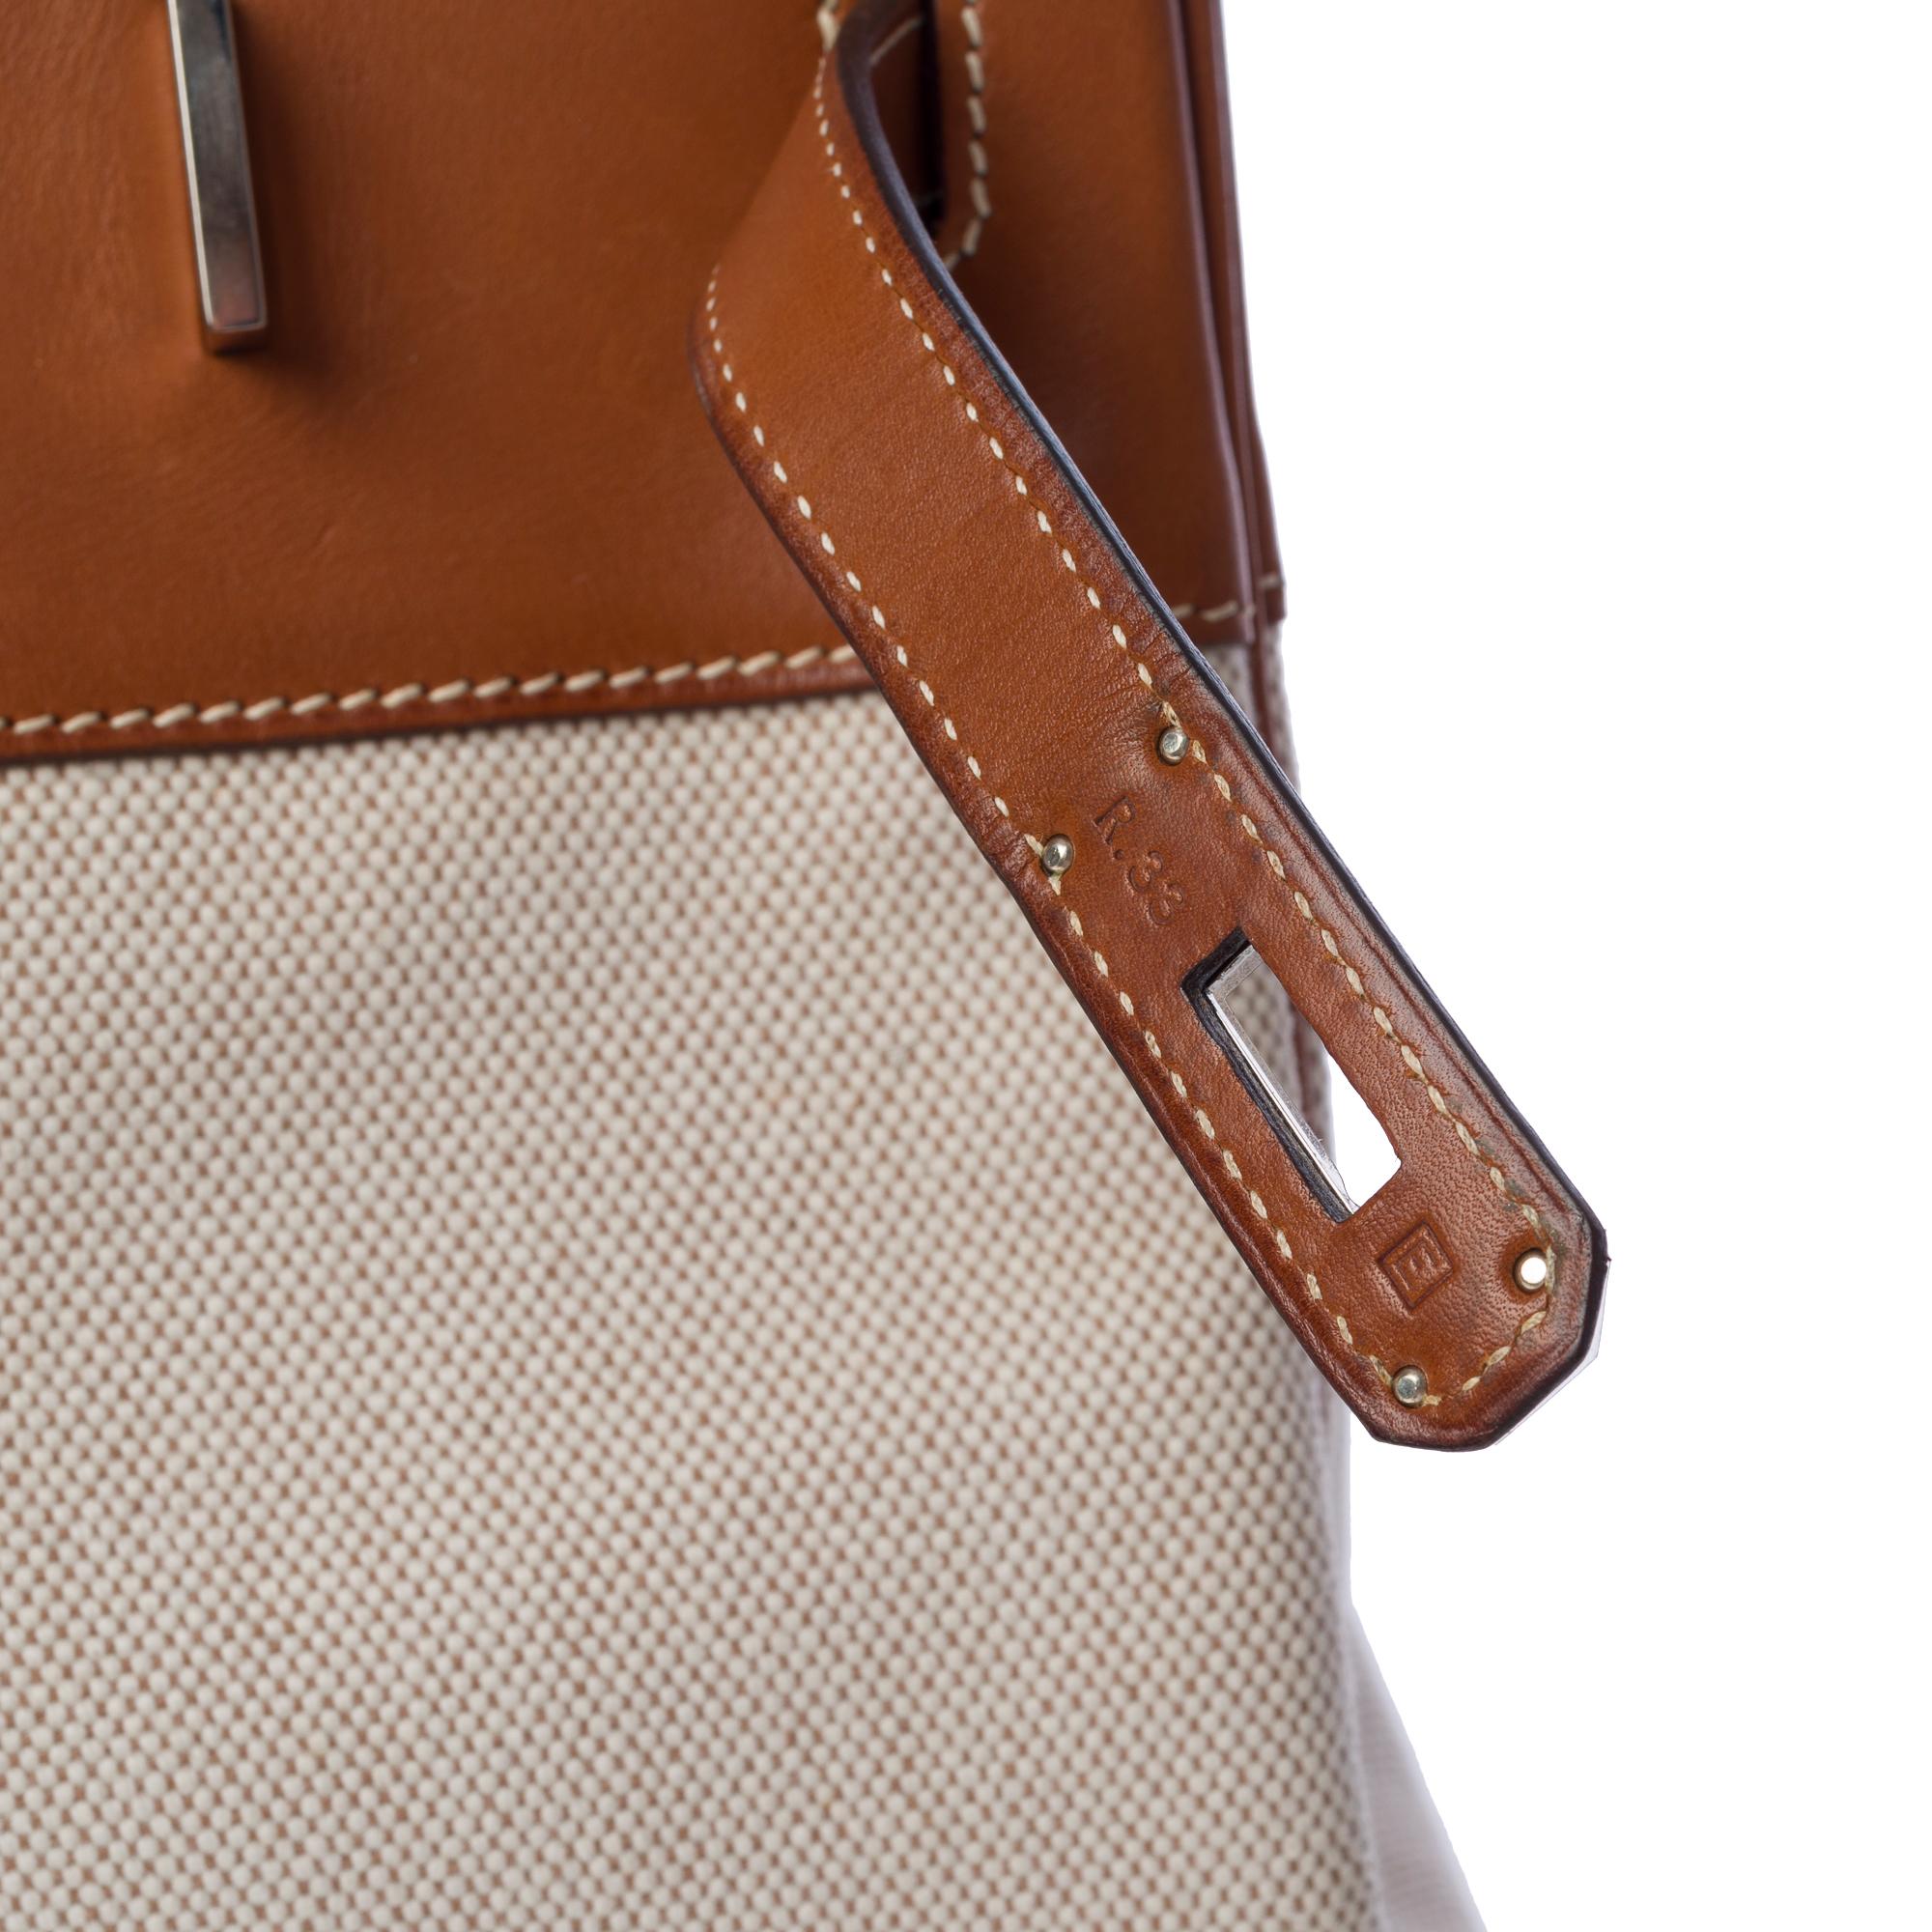 Fantastique sac à main Hermès Birkin 35 en cuir Barénia marron et toile Brown, SHW 2